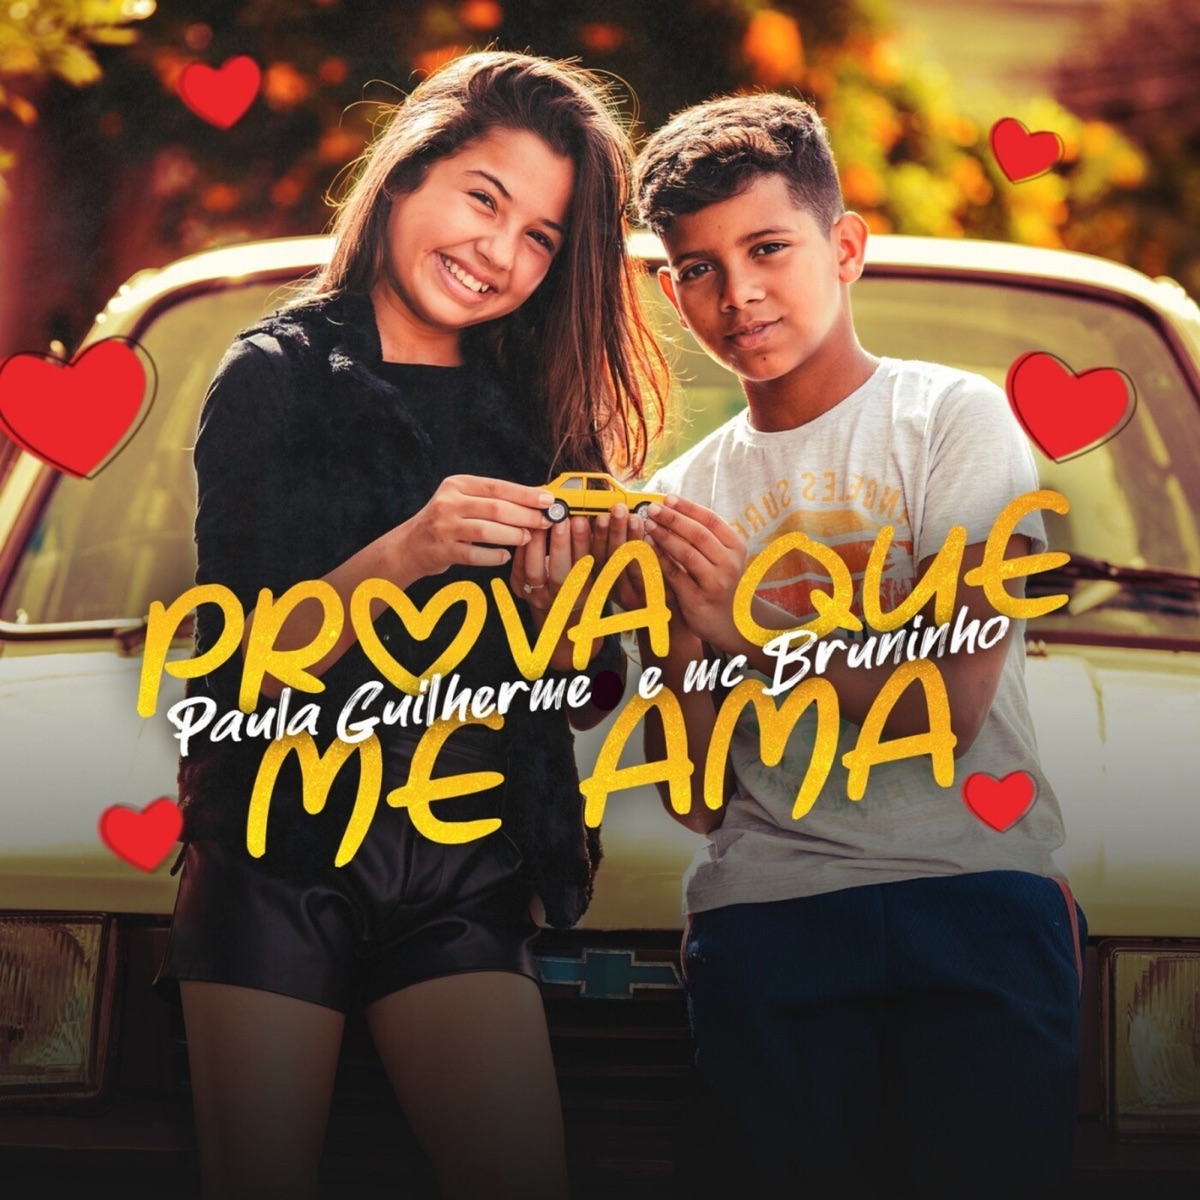 Jogo do Amor - Single - Album by MC Bruninho - Apple Music